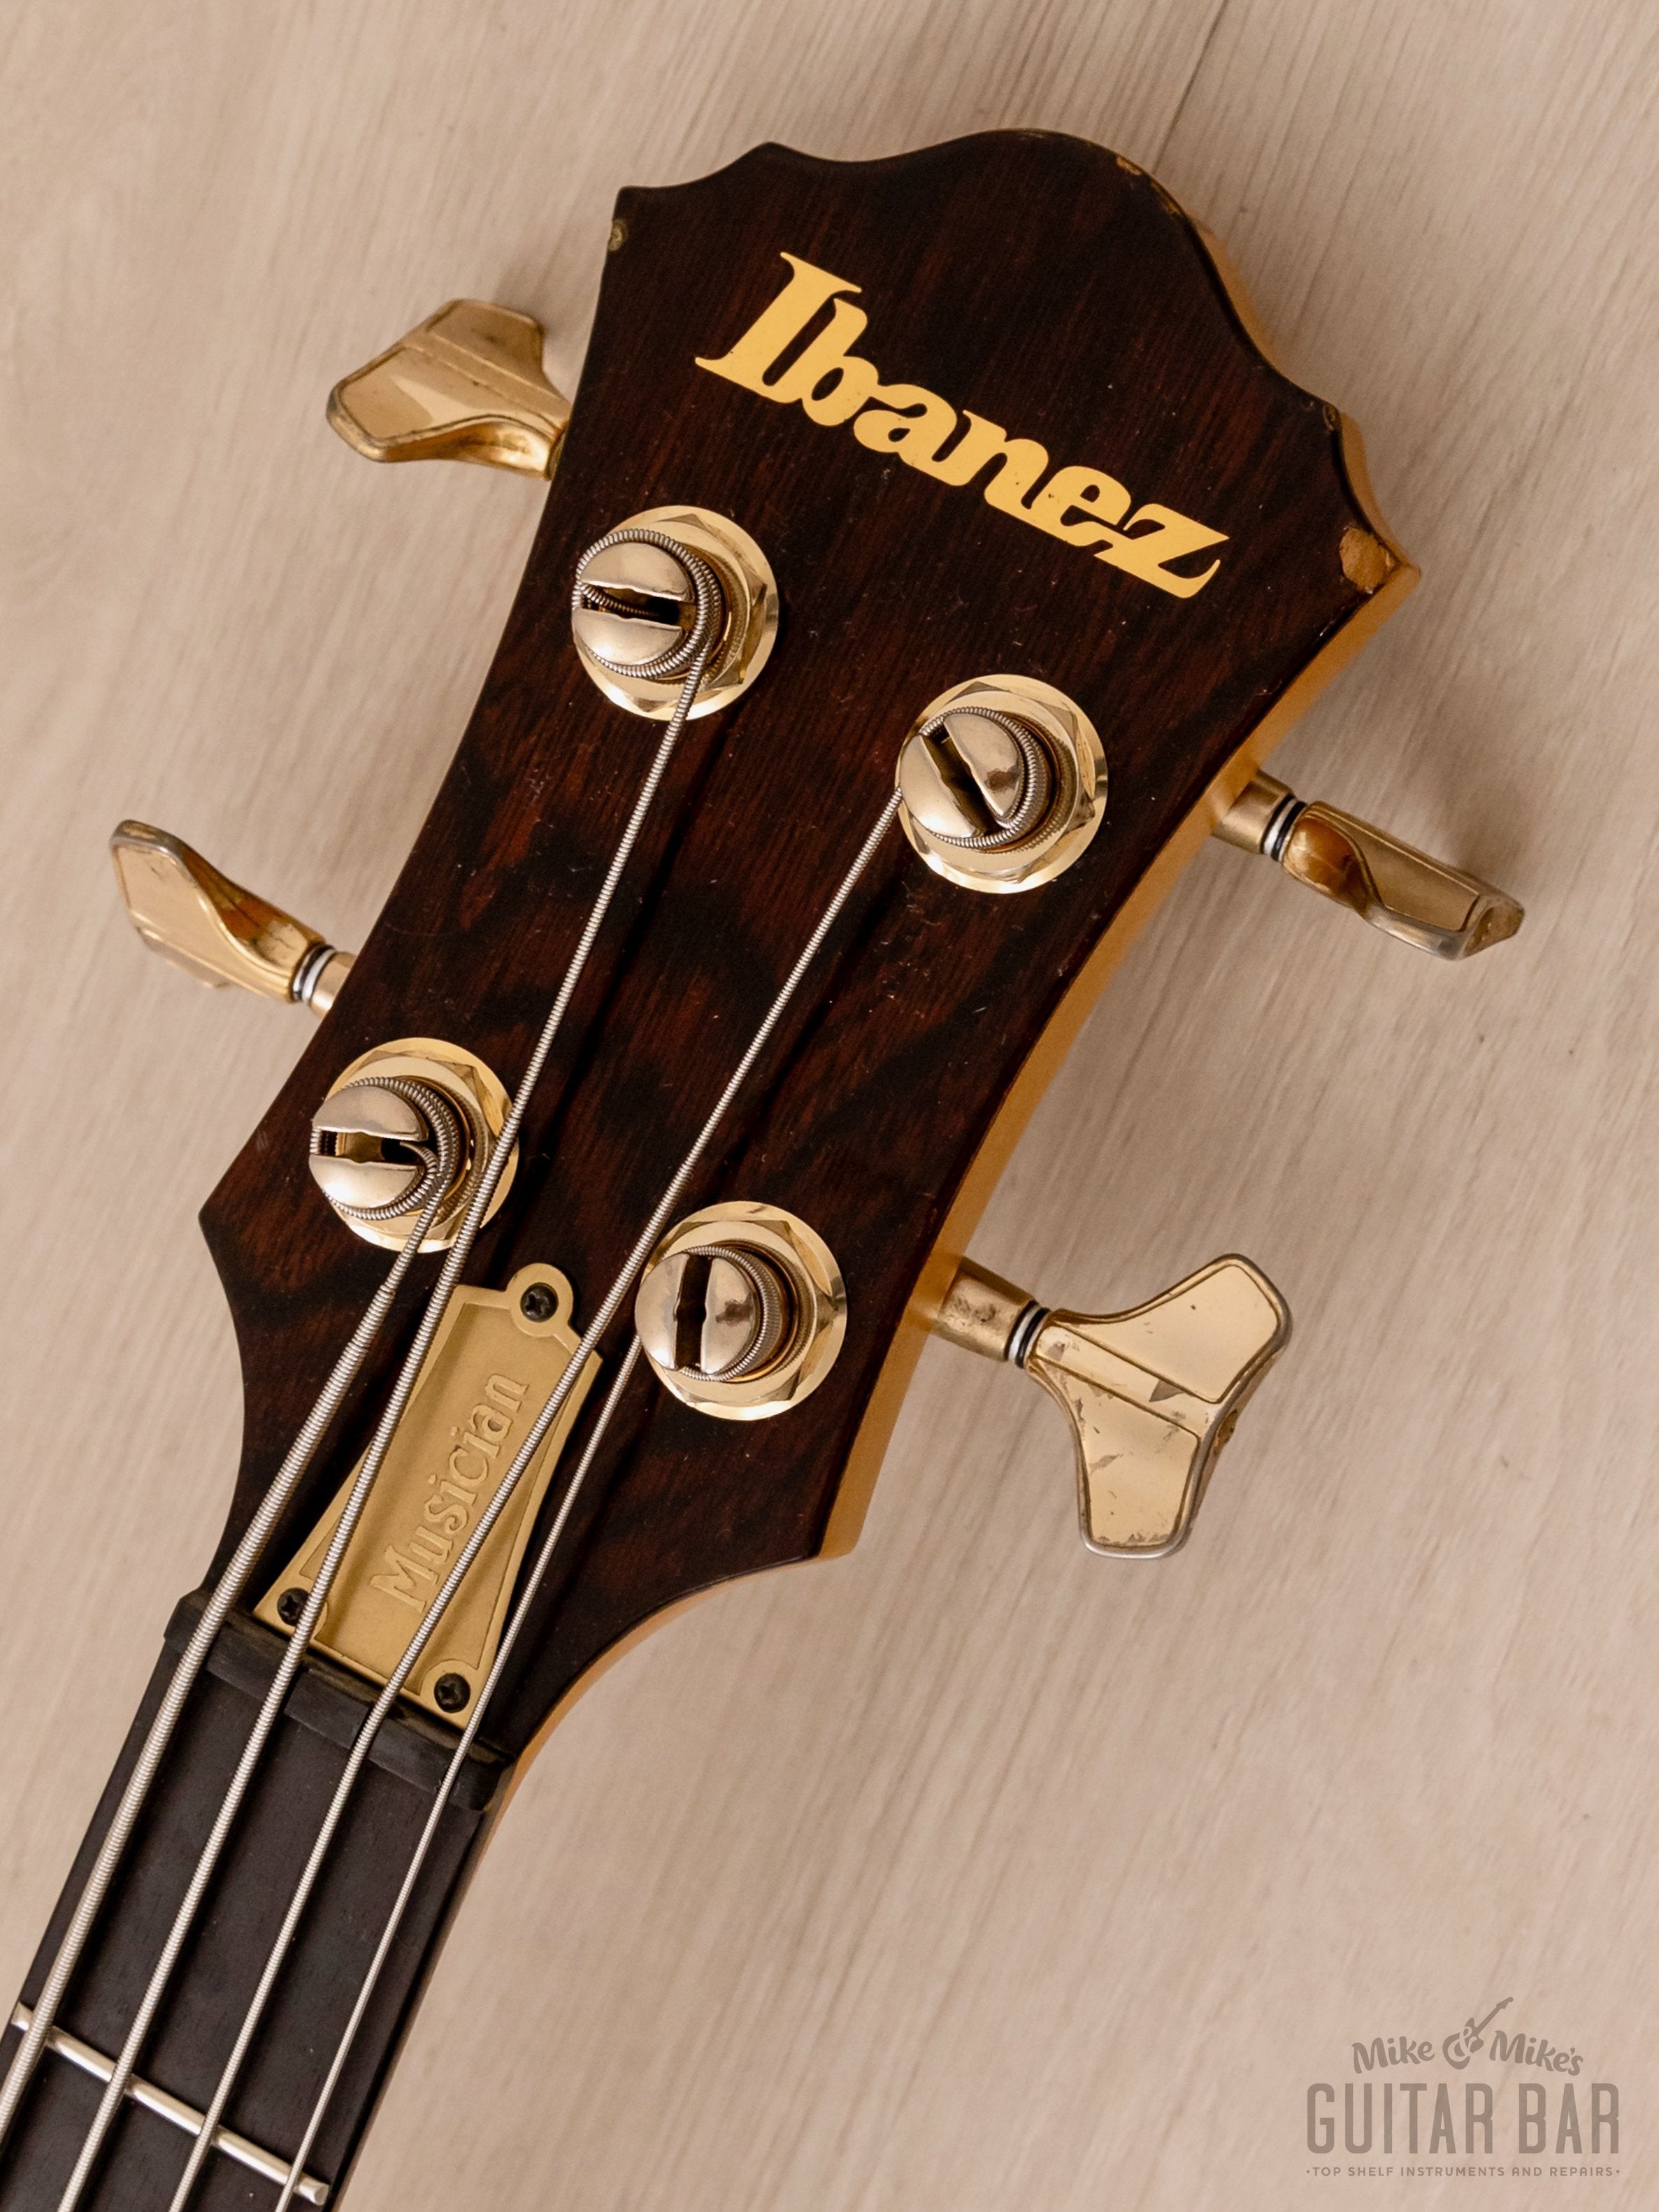 1985 Ibanez Musician MC924 DS Vintage Neck Through Bass Guitar Dark Stain w/ Hangtag, Japan